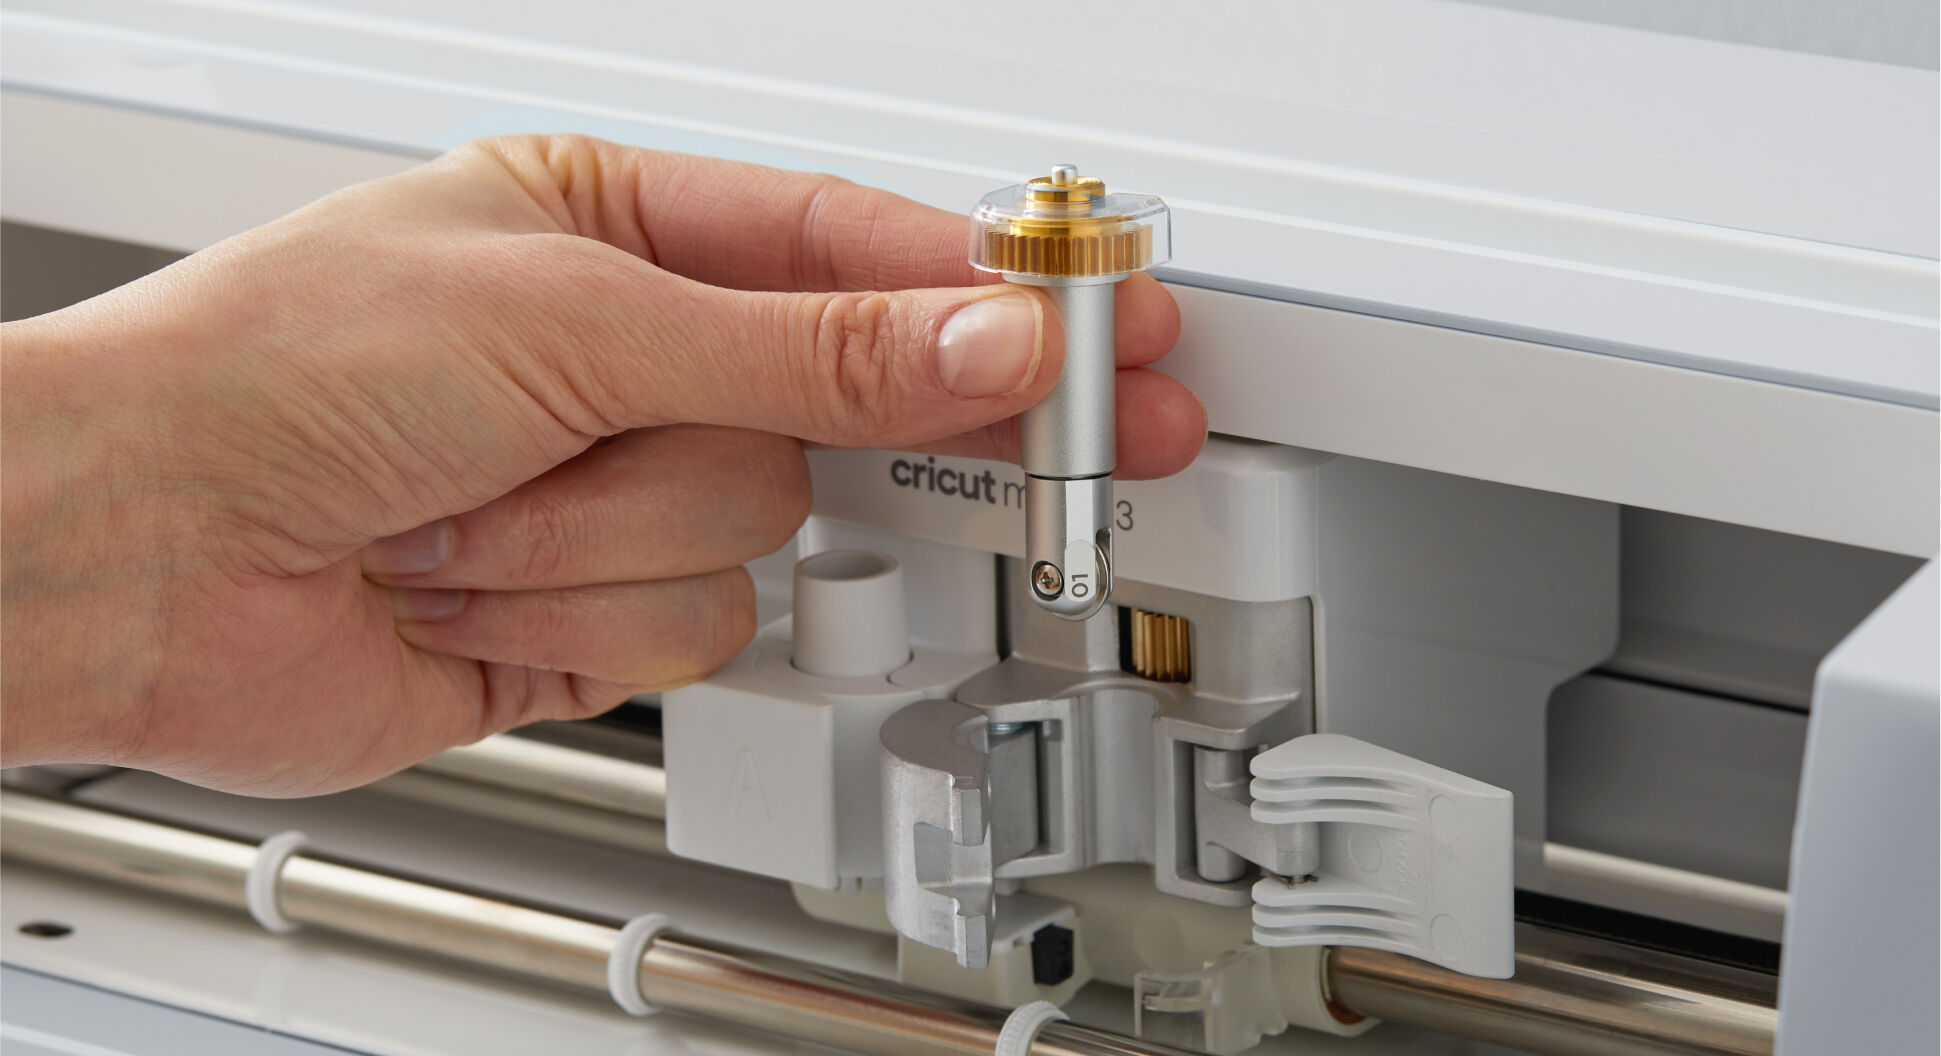 Cricut Maker 3: Precision Cutting Machine for over 300 materials